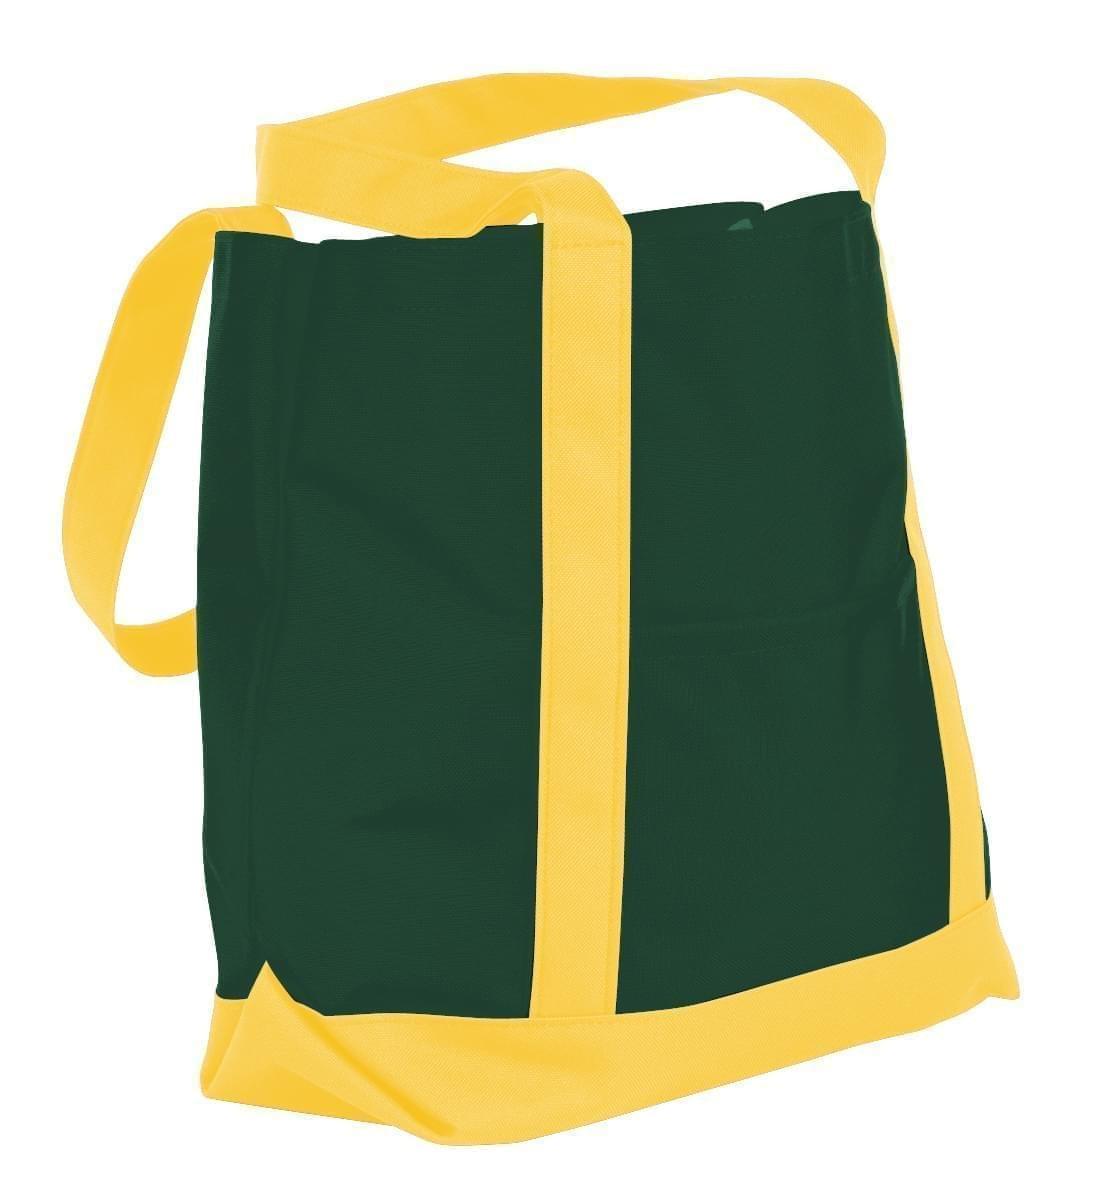 USA Made Canvas Fashion Tote Bags, Hunter Green-Gold, XAACL1UAIQ